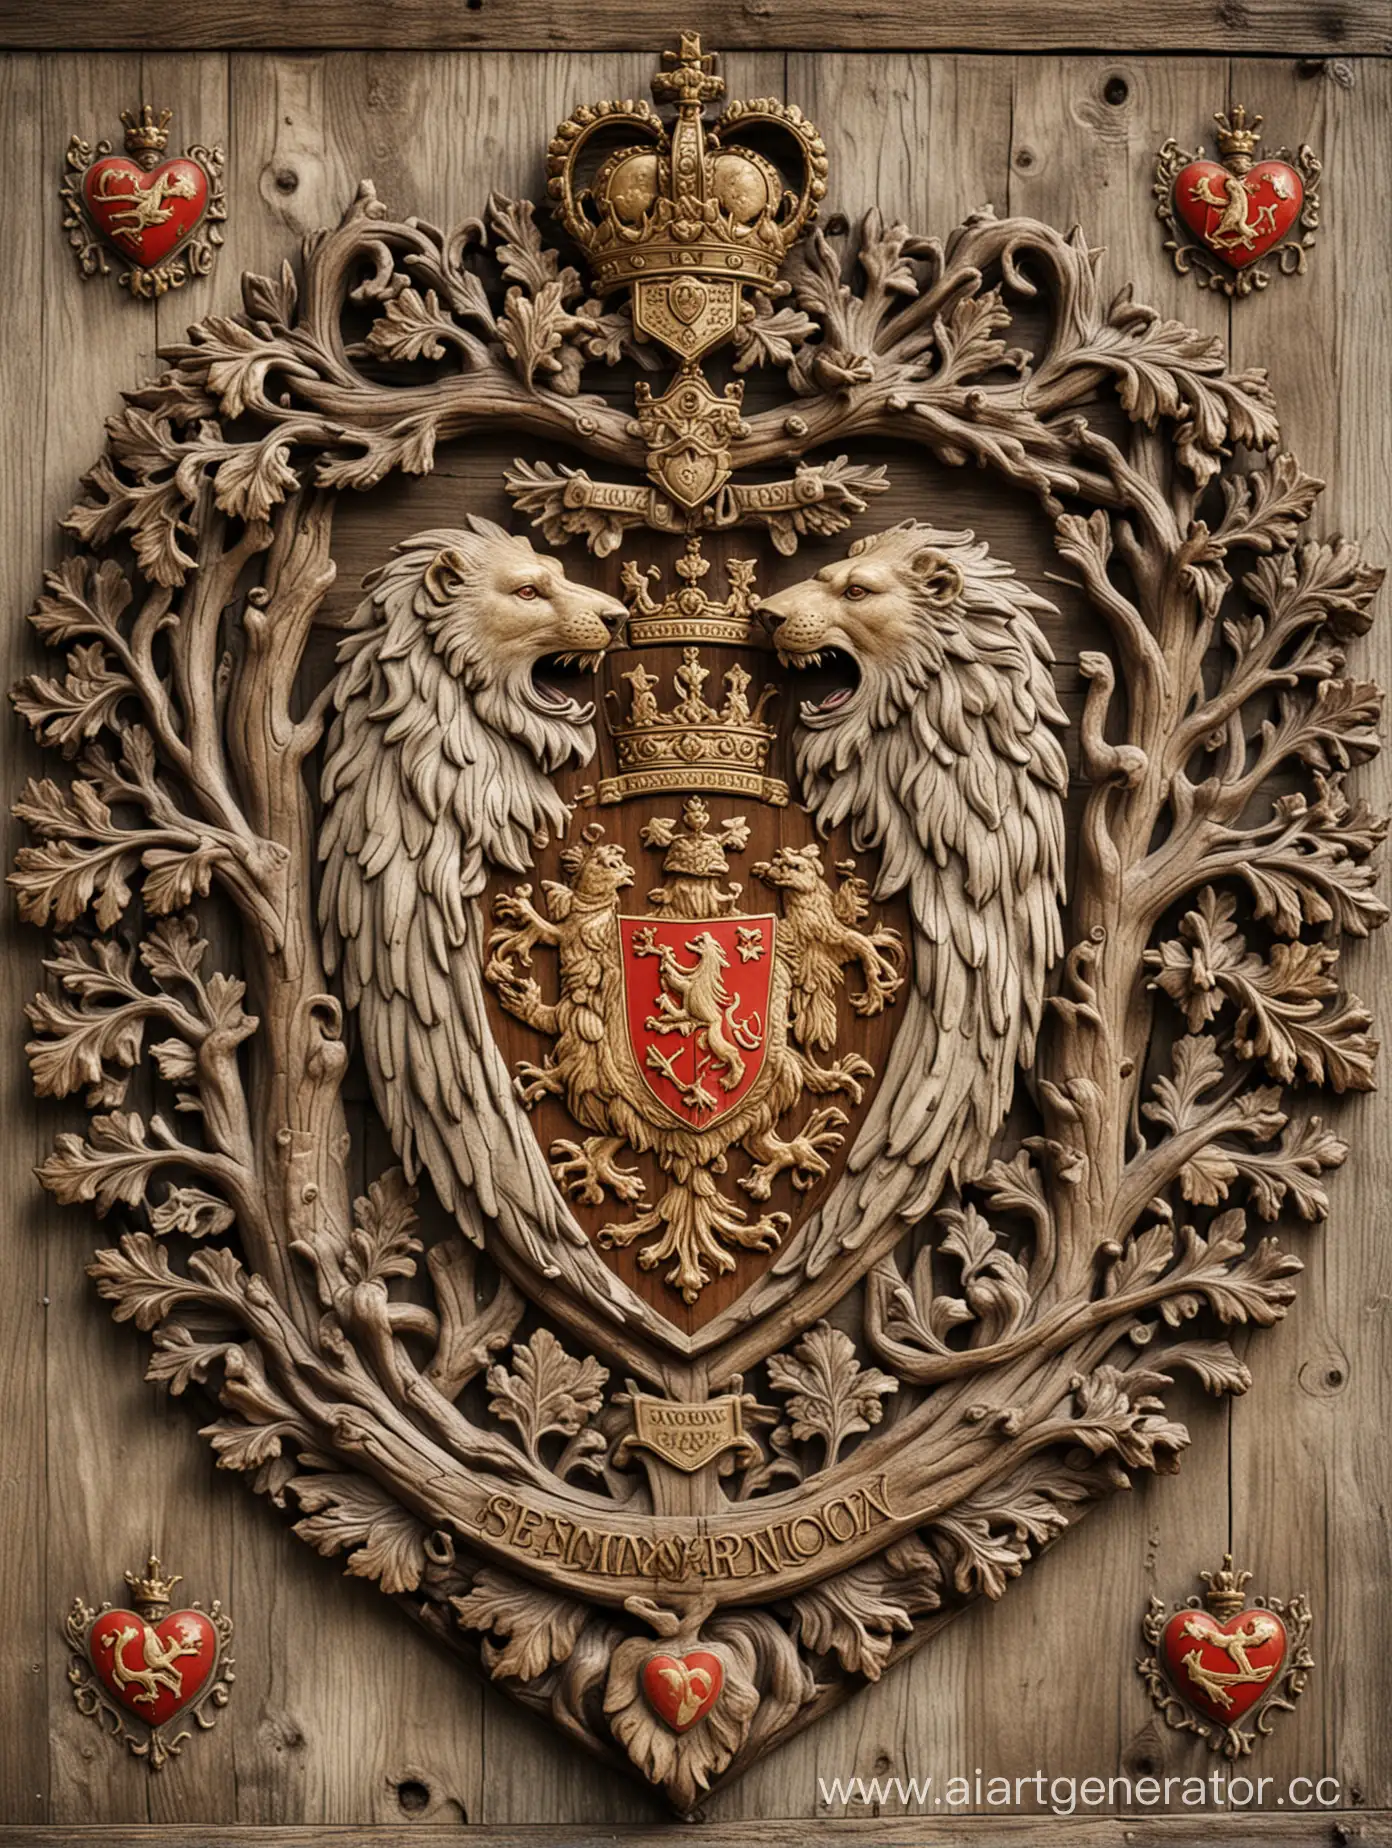 Semyonov-Family-Coat-of-Arms-with-Heart-Dove-Bear-Lion-and-Oak-Tree